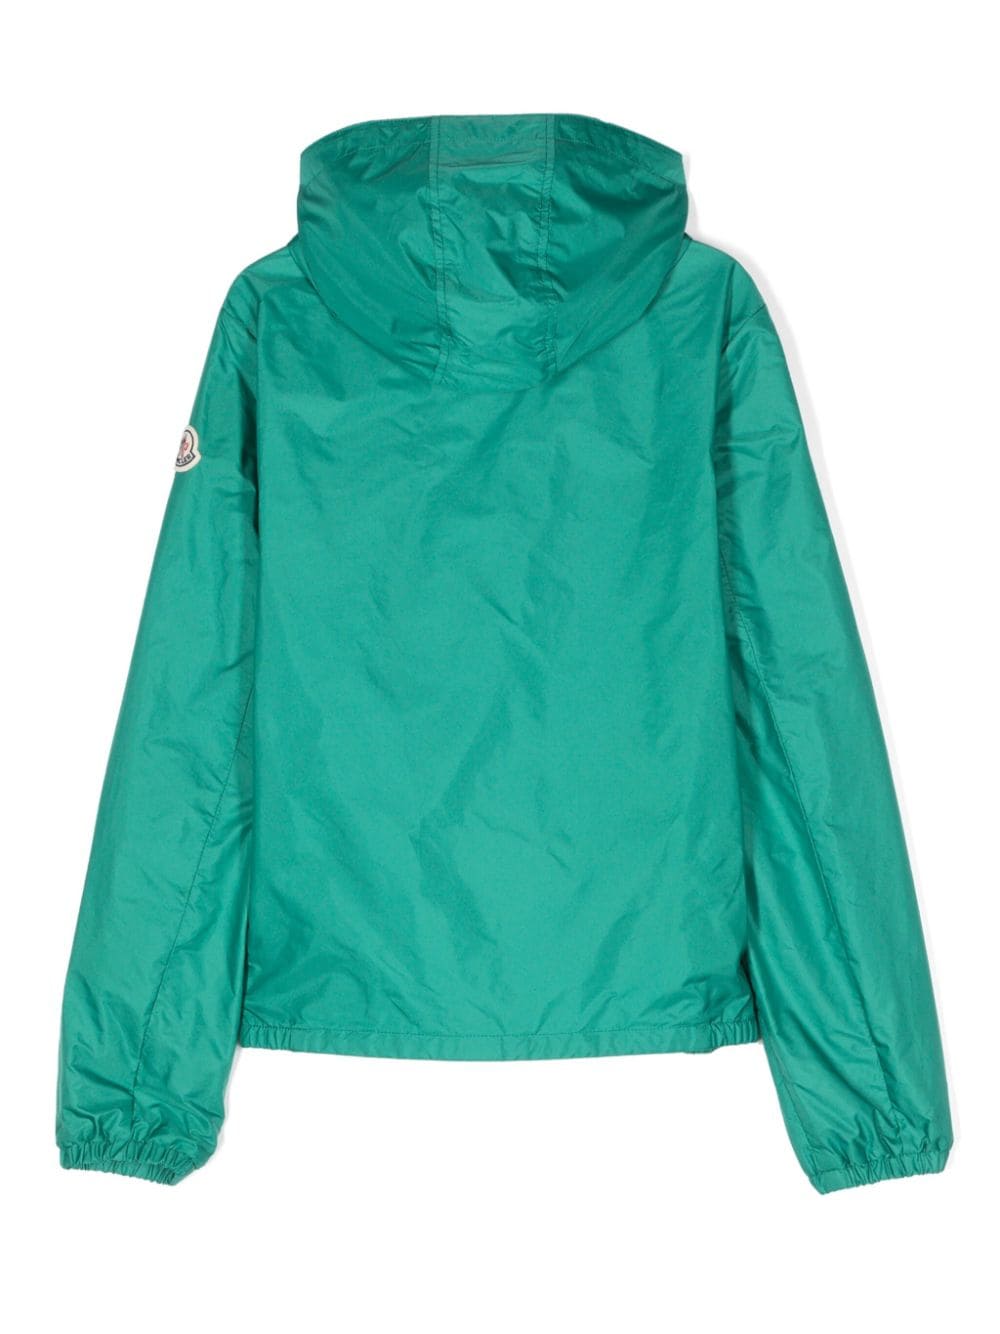 New Urville green jacket for children